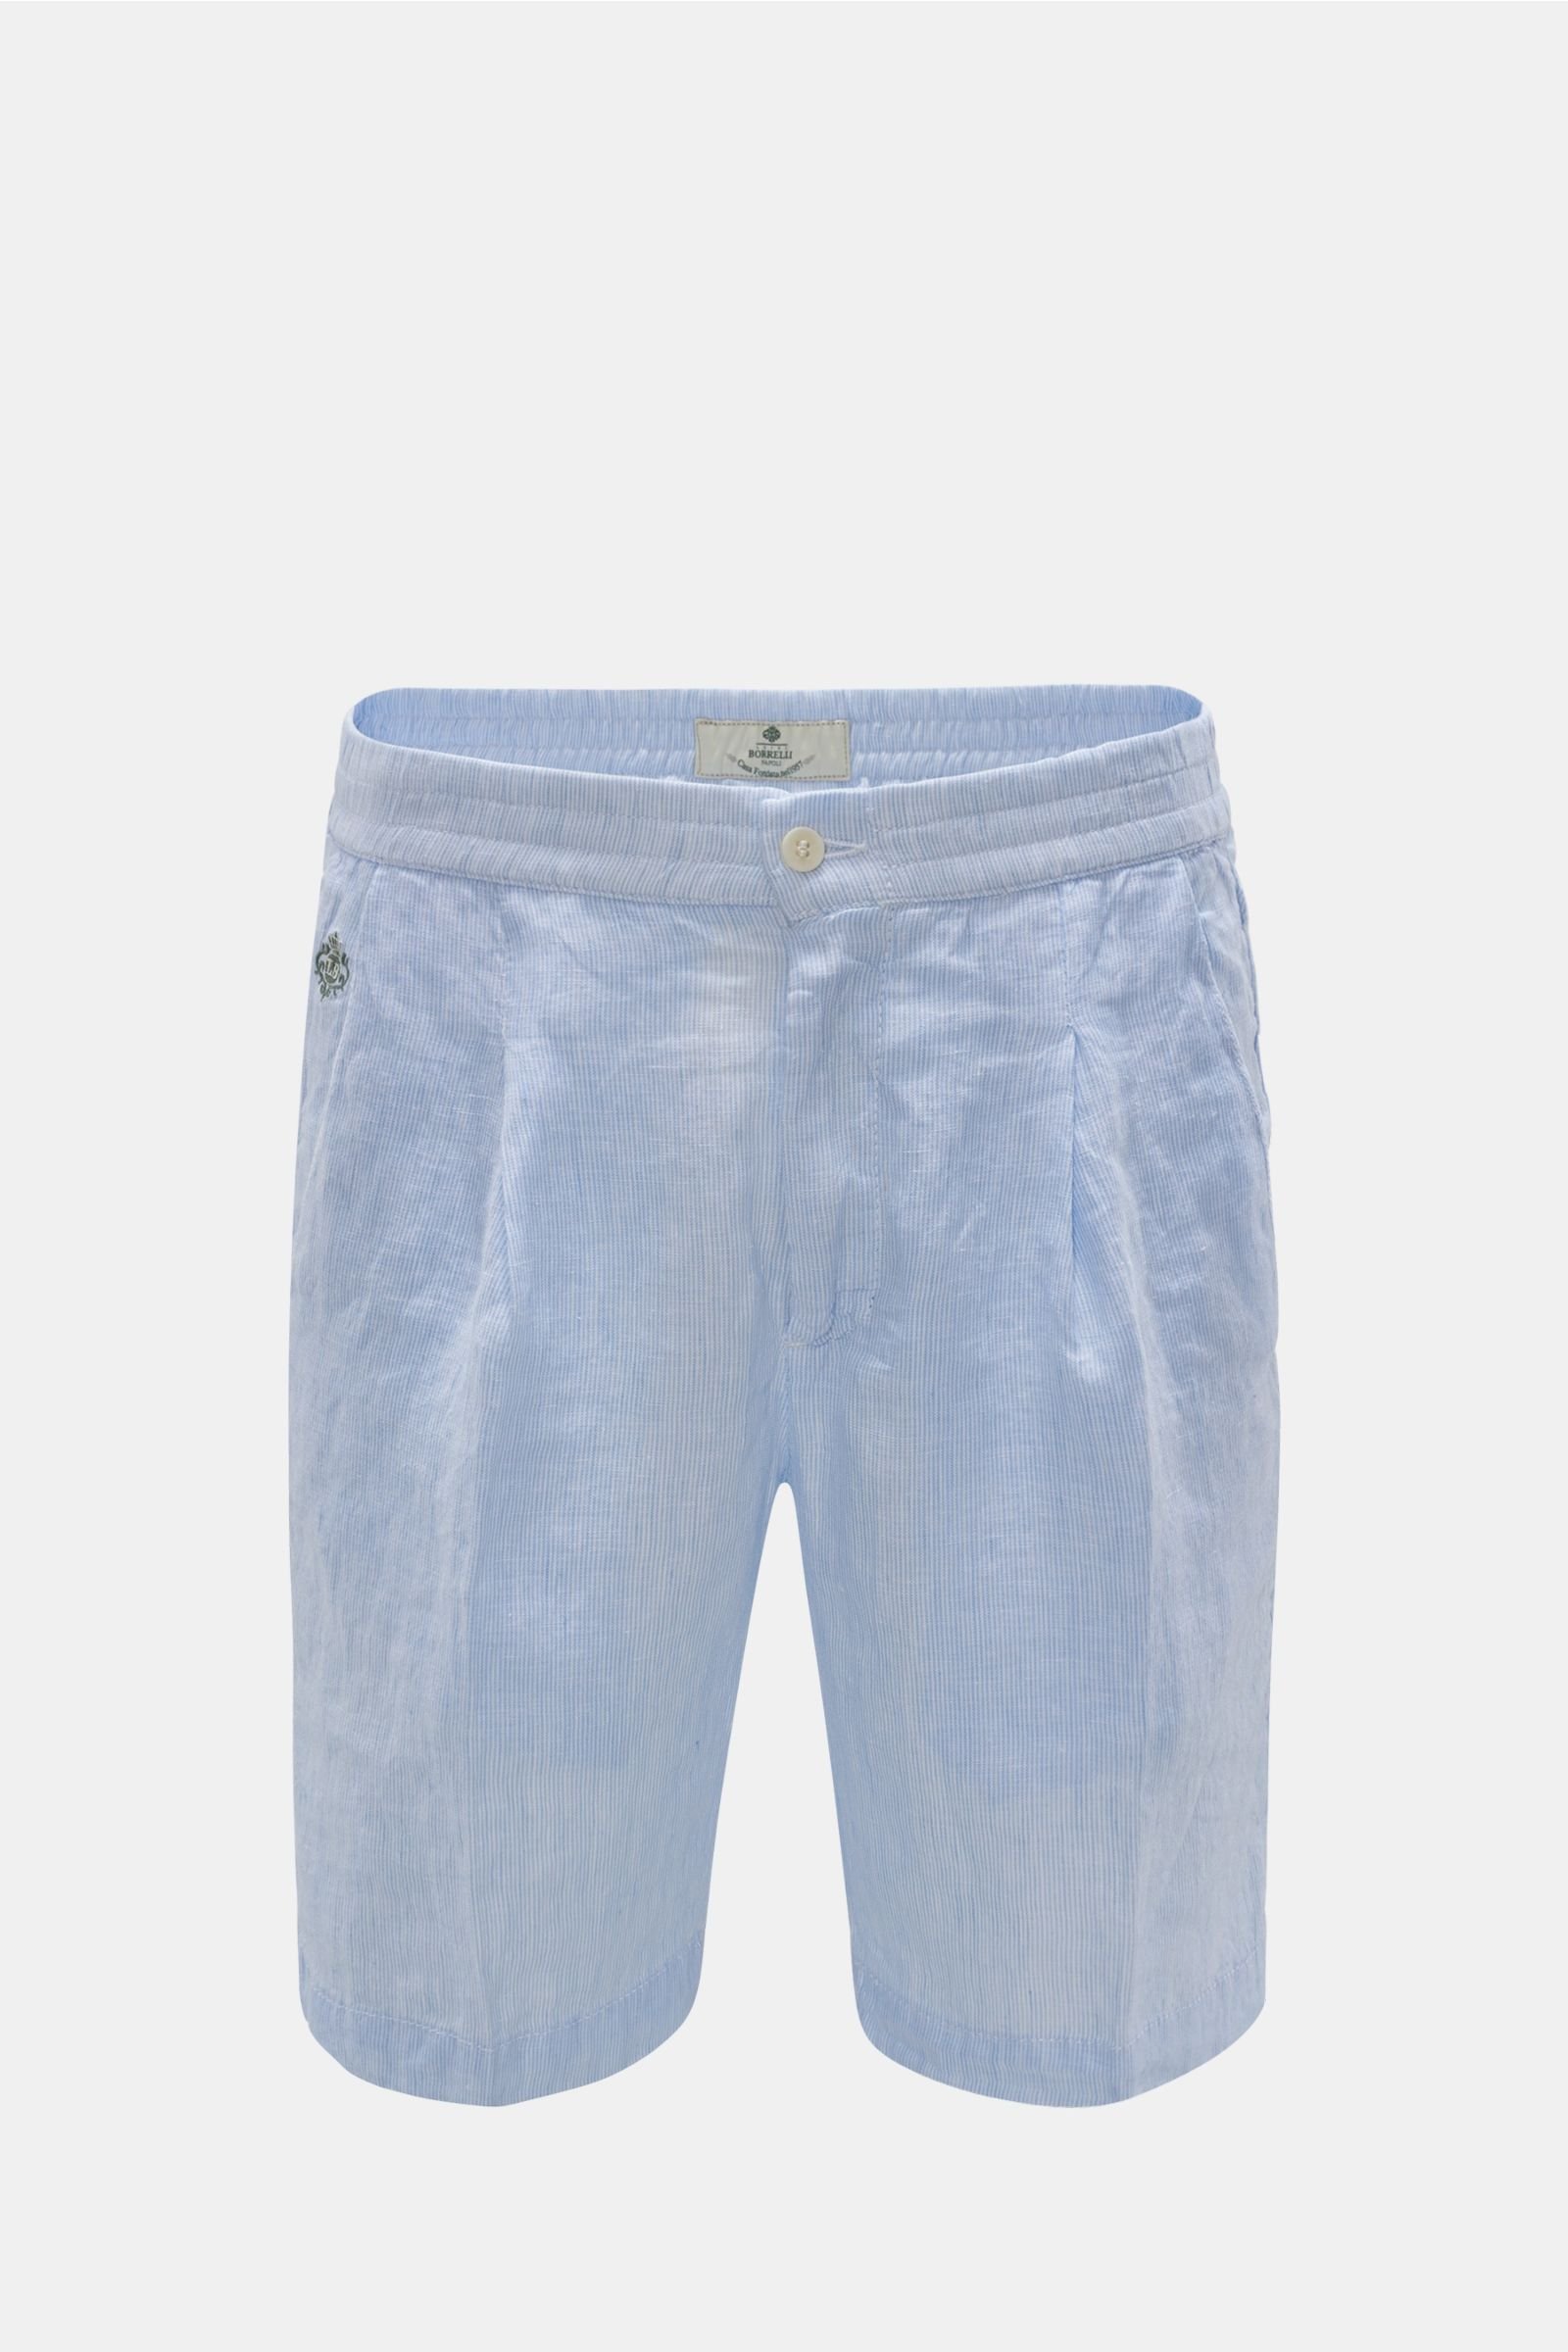 Linen Bermuda shorts light blue/white striped